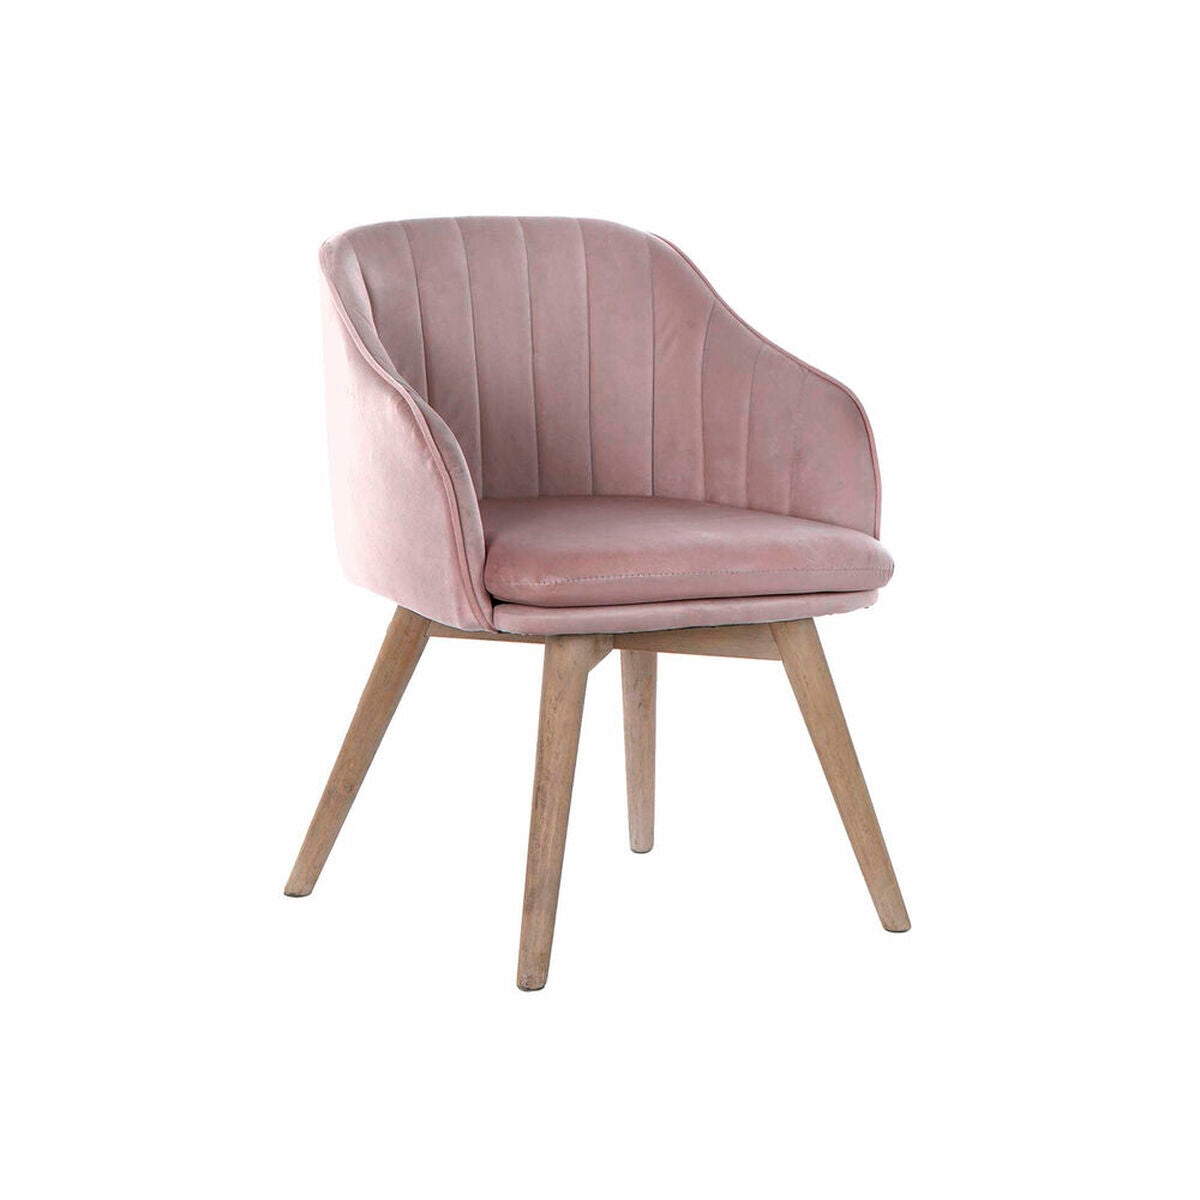 Velvet Pink Chair with Wooden Legs (56 x 55 x 74 cm)